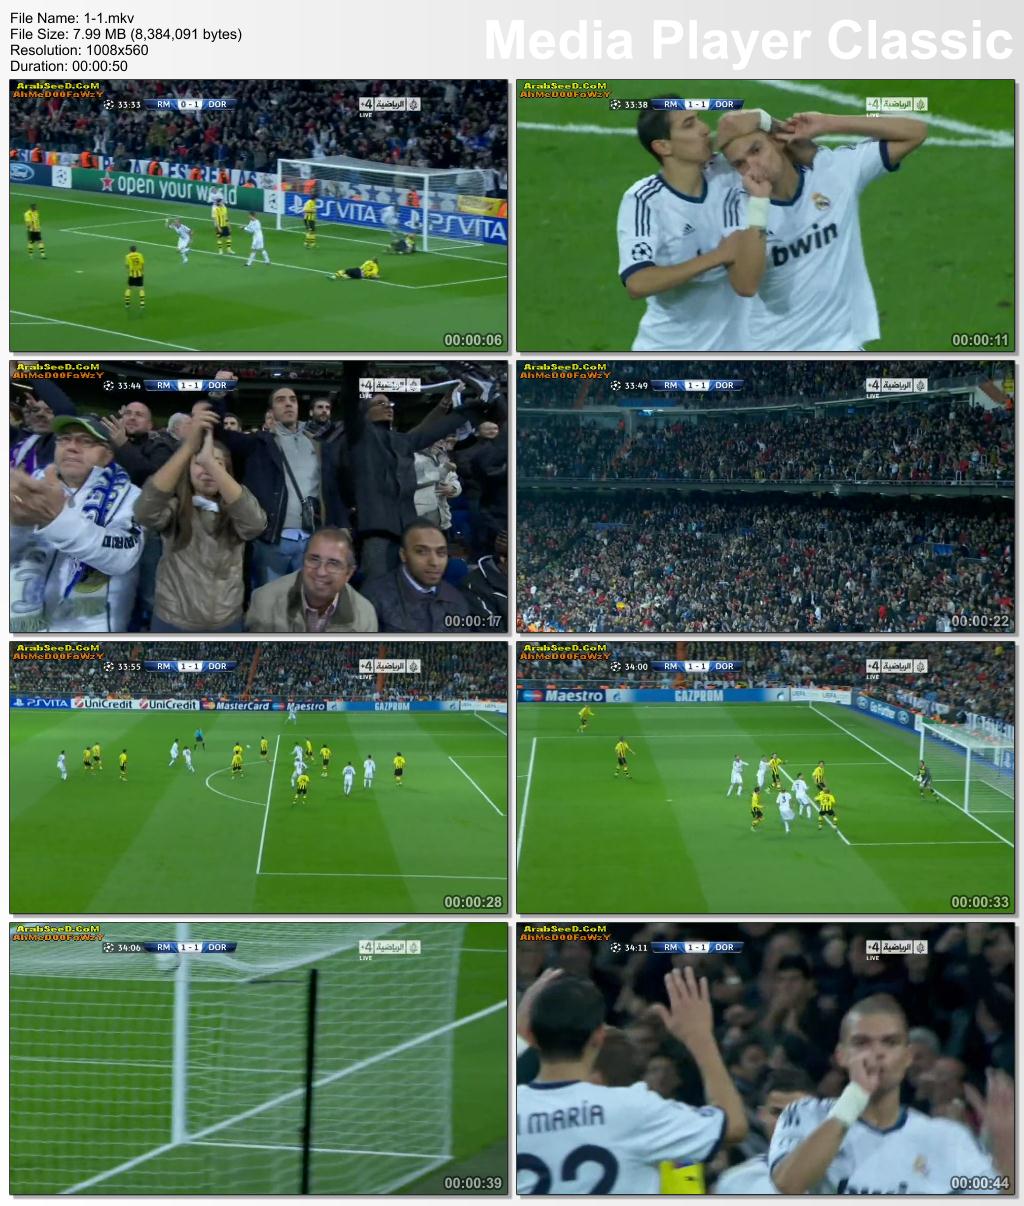   Real Madrid Borussia 121107091635Bwmi.jpg